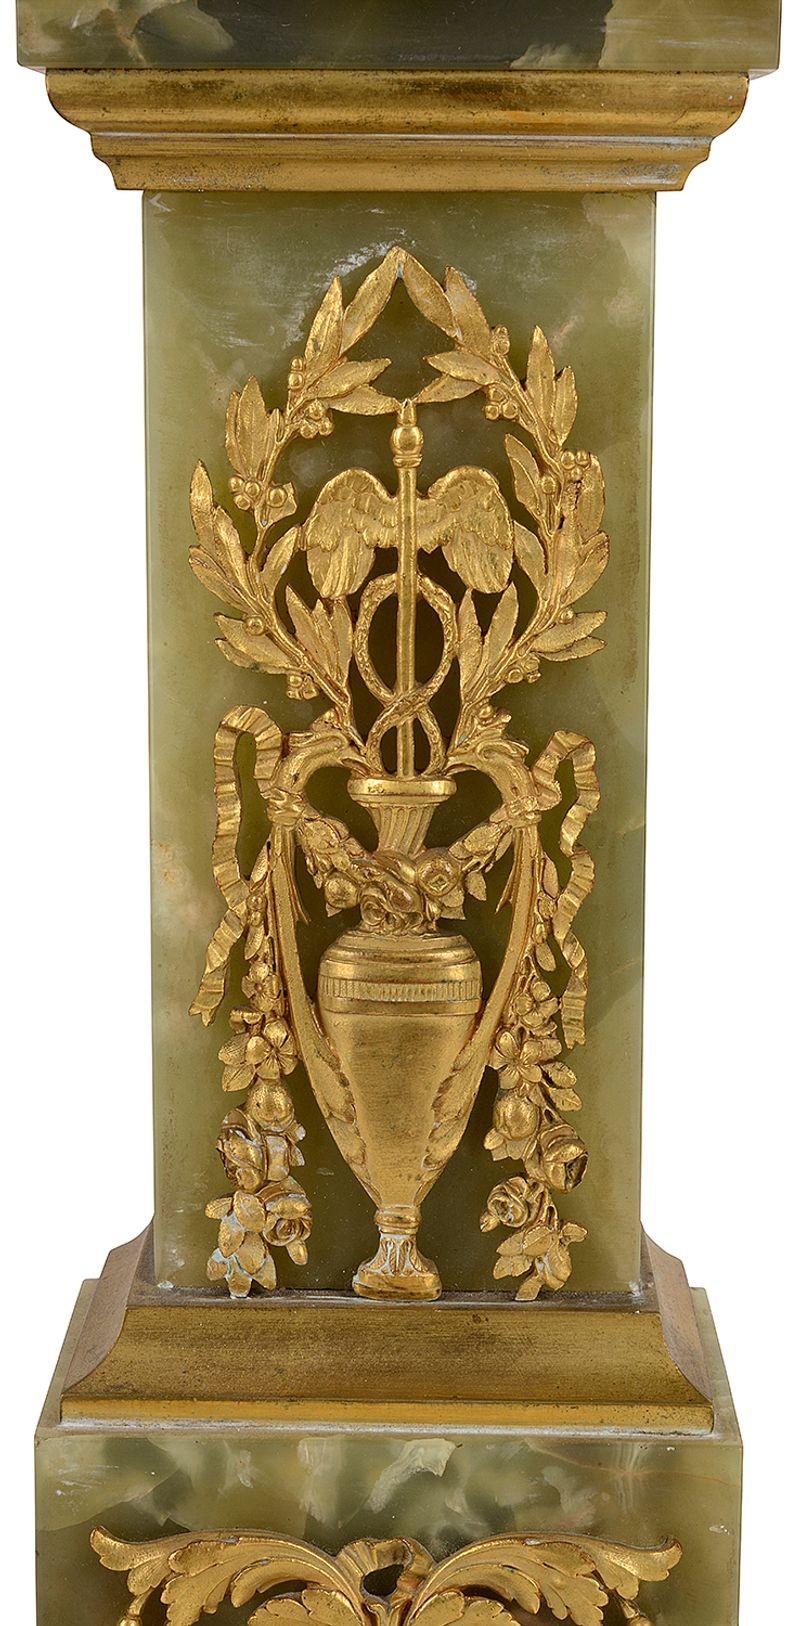 Empire Revival Minature Onyx + Ormolu Table/Mantel Clock, Late 19th Century For Sale